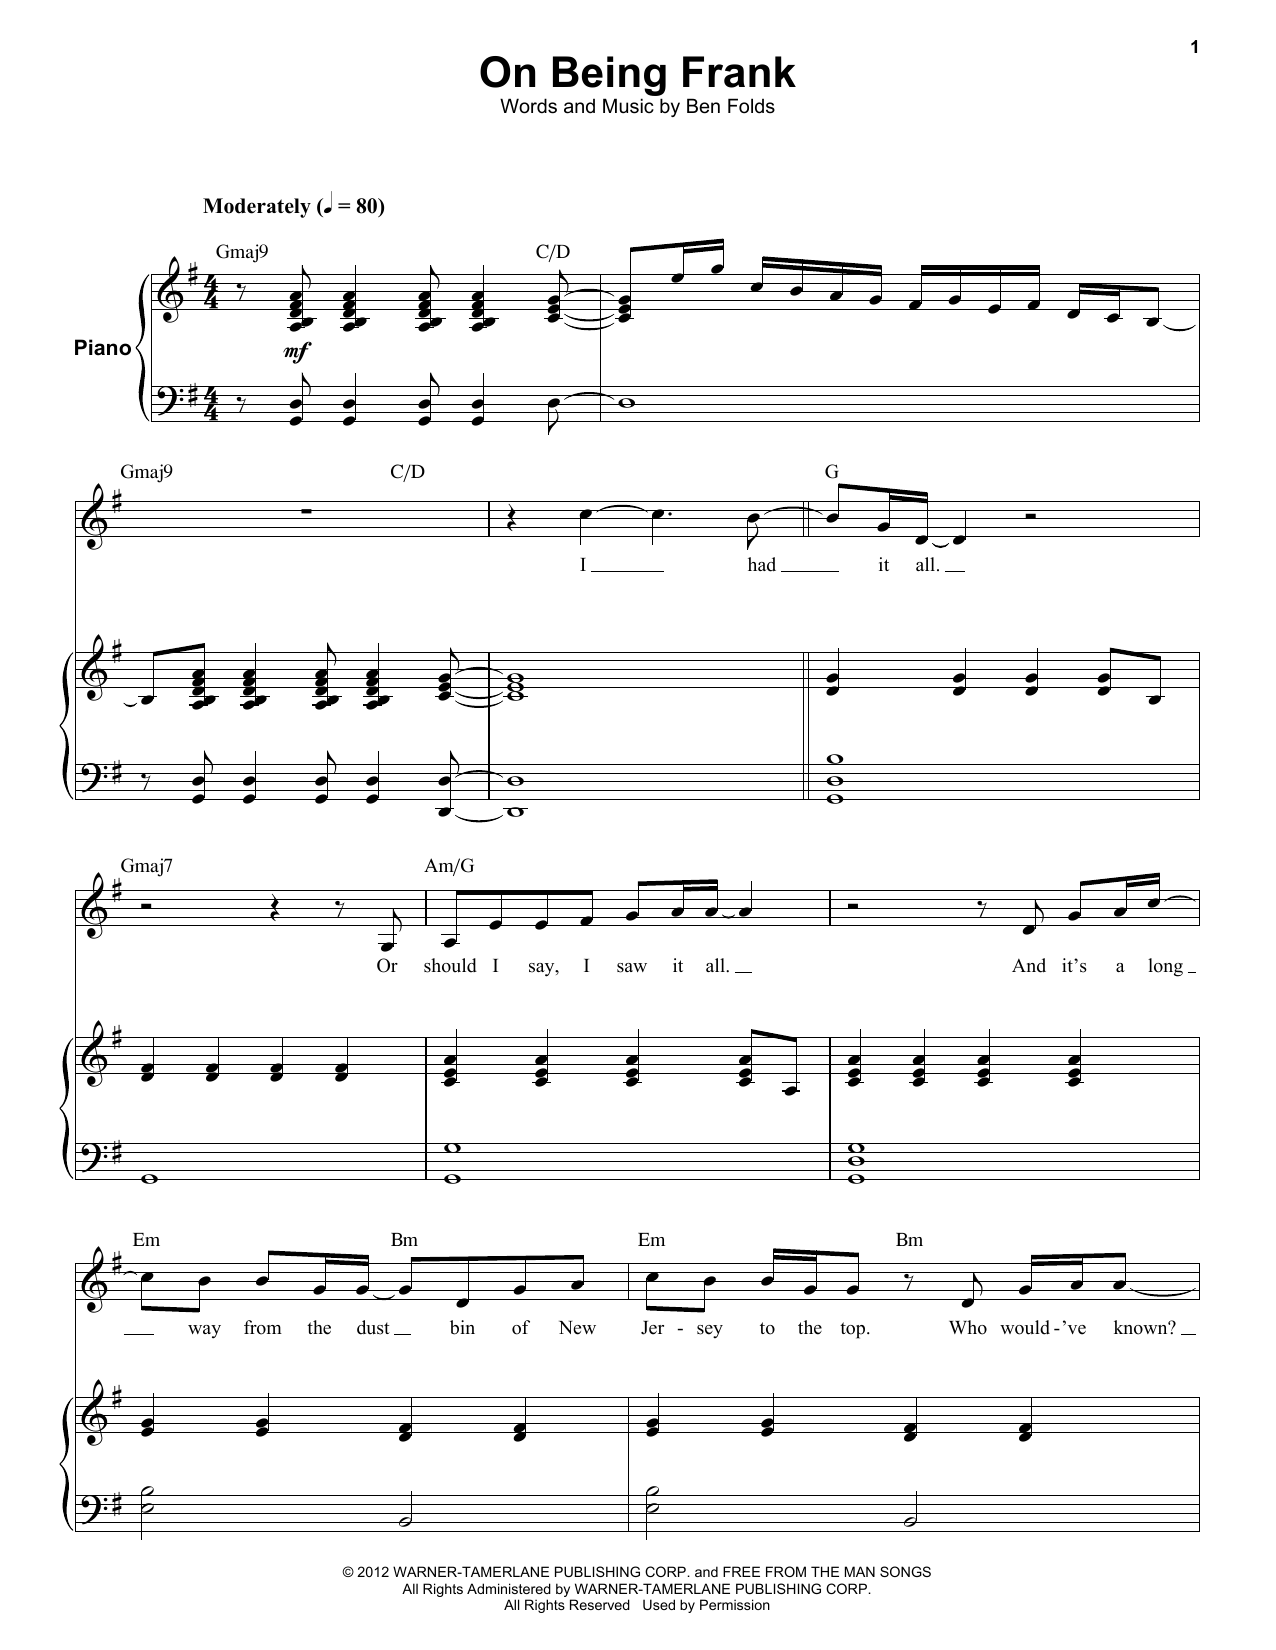 Ben Folds Five On Being Frank Sheet Music Notes & Chords for Keyboard Transcription - Download or Print PDF